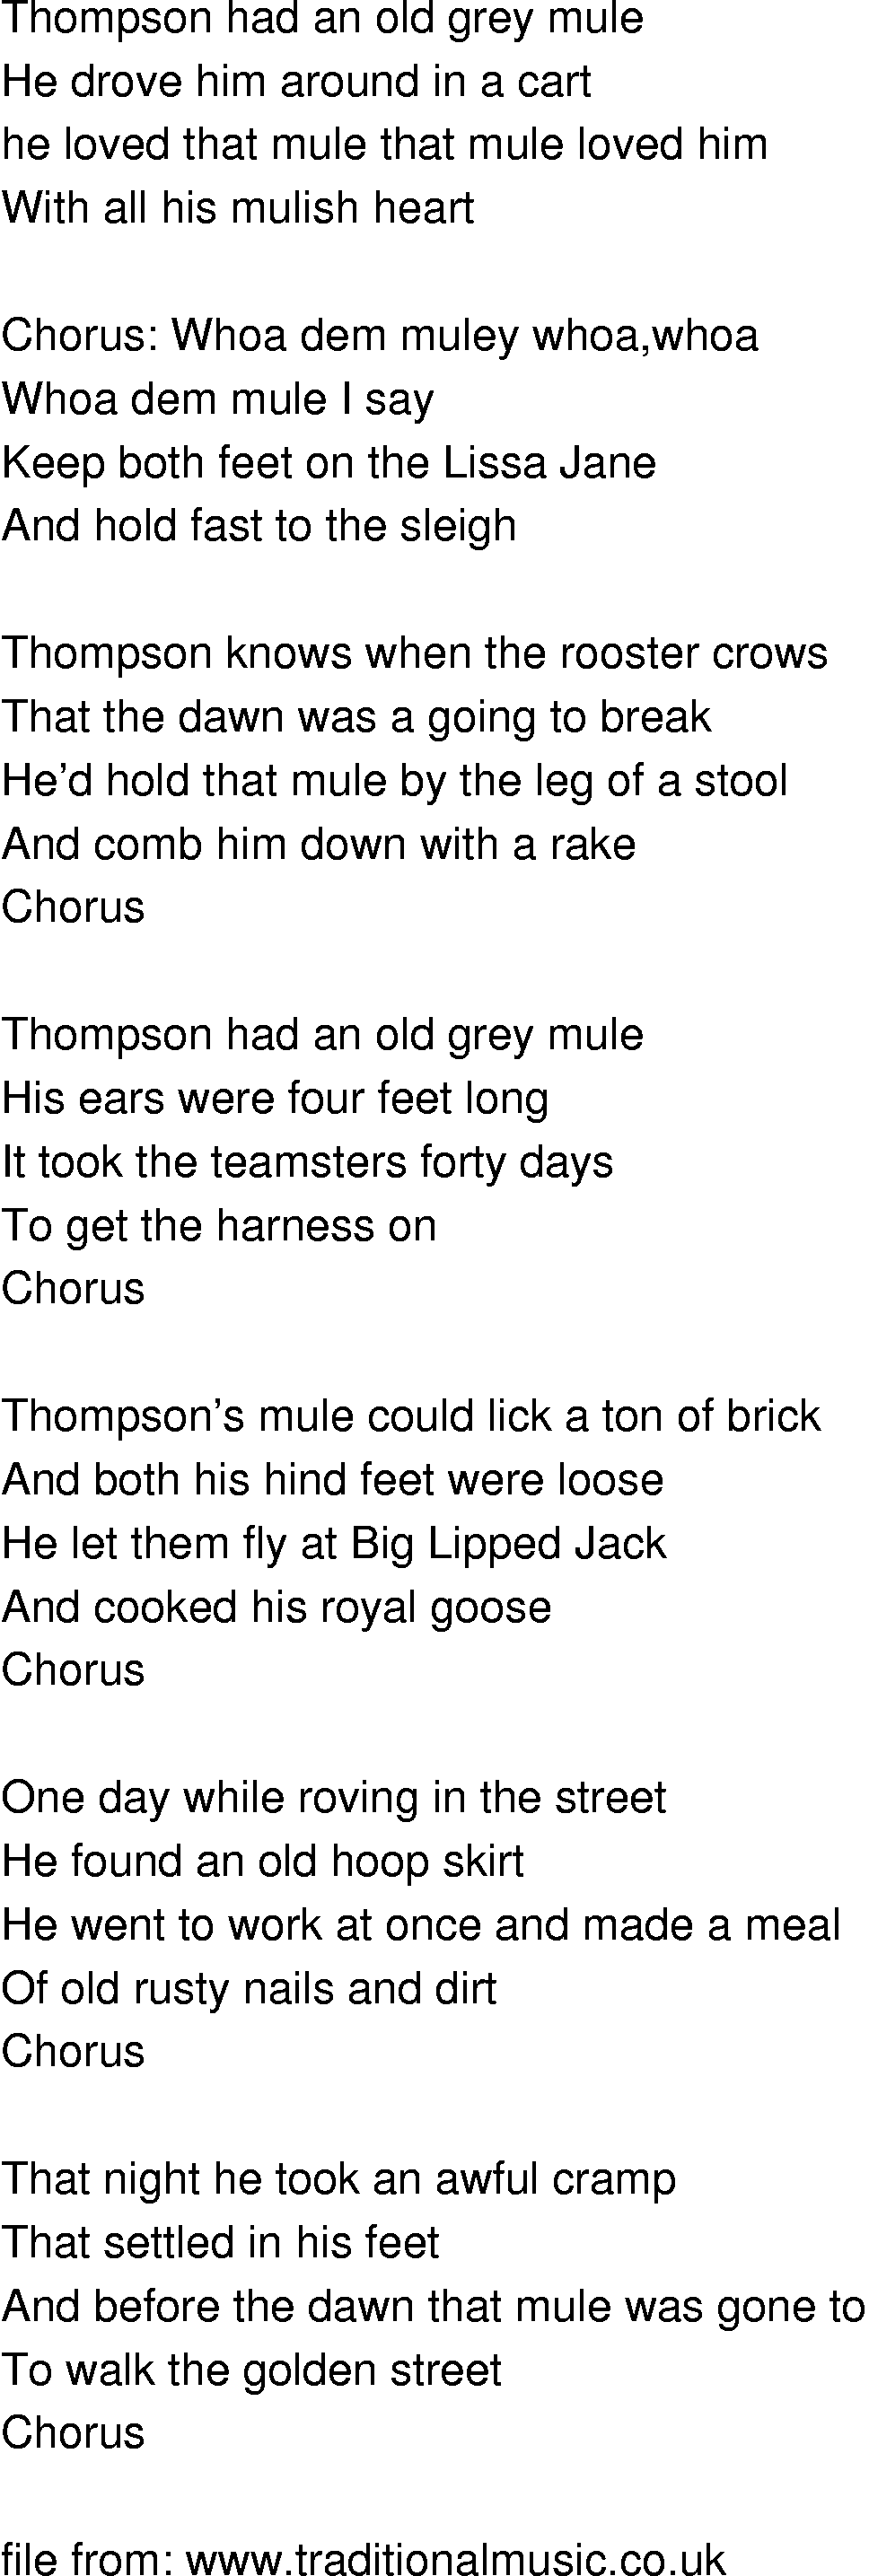 Old-Time (oldtimey) Song Lyrics - thompsons old grey mule